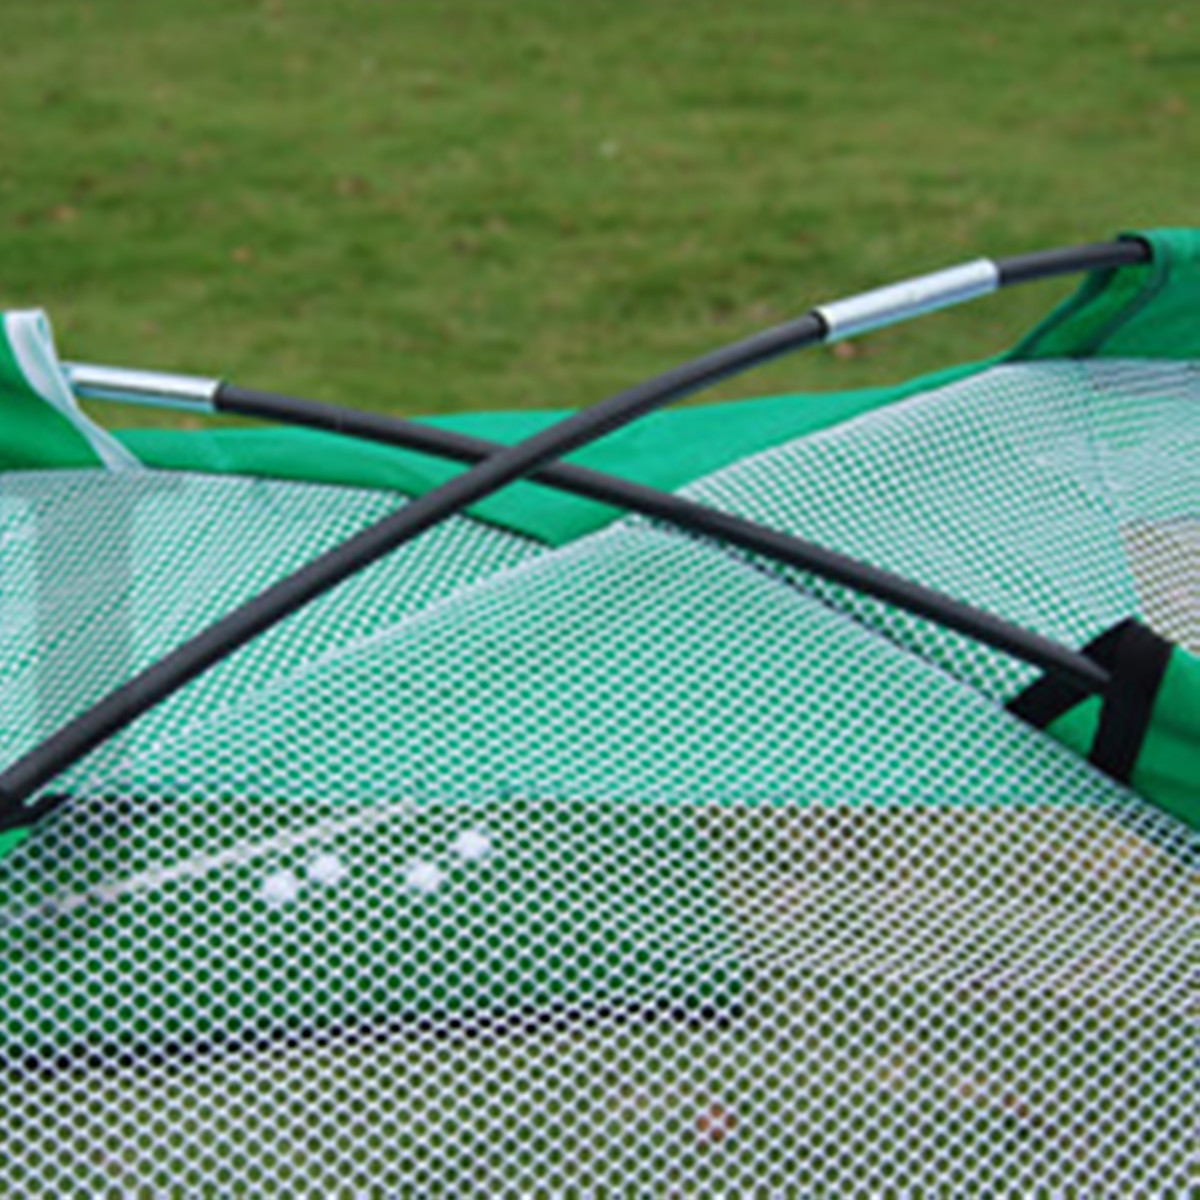 200x140cm-Foldable-Easy-Golf-Hitting-Cage-Practice-Net-Club-Trainer-Golf-Training-Net-Sport-Aid-Mat--1190891-11